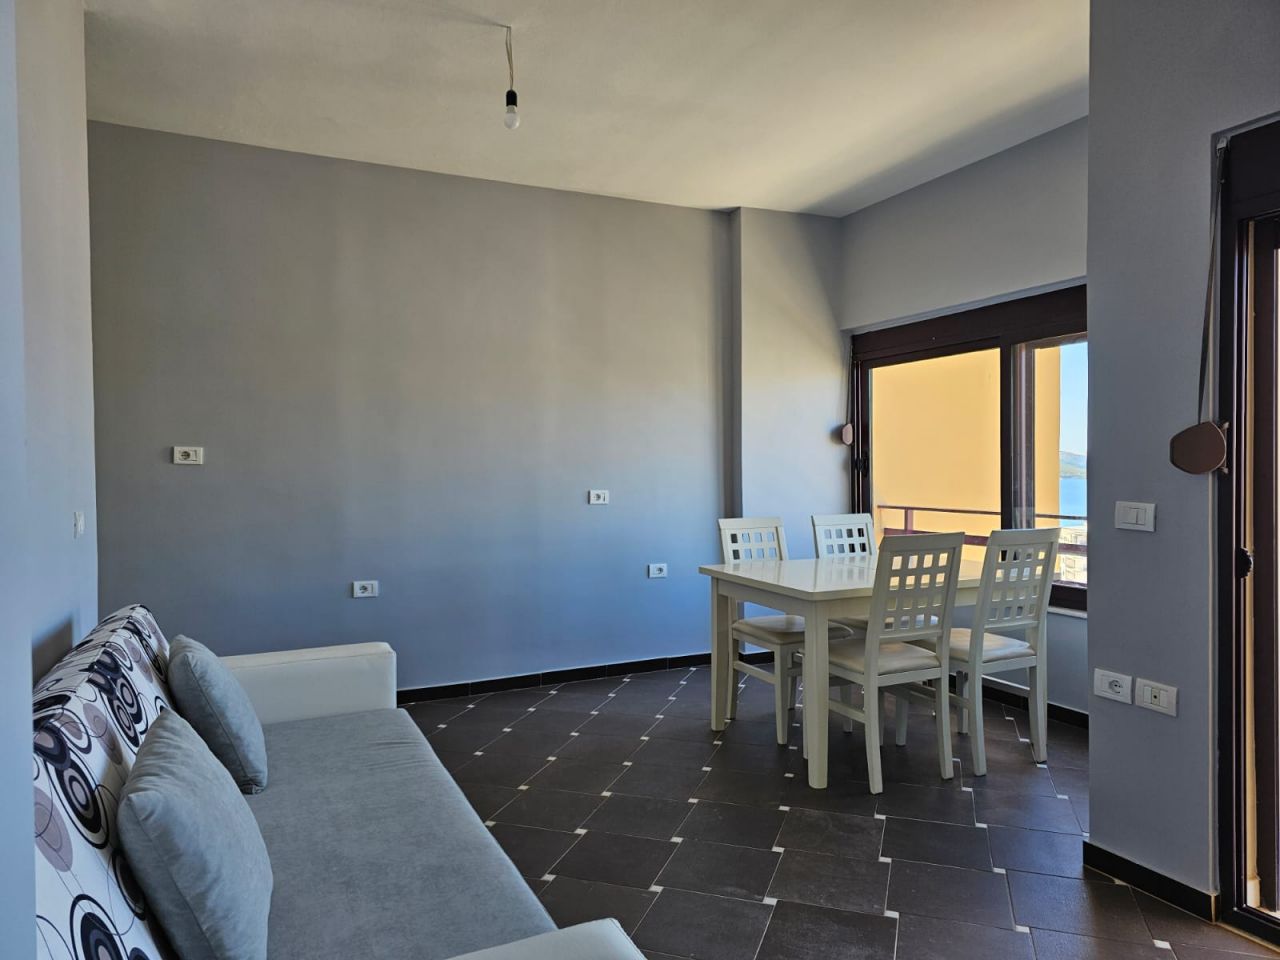 Albania Real Estate For Sale In Saranda  With A Fantastic Panoramic Sea View Over The Bay Of Saranda And Corfu Island